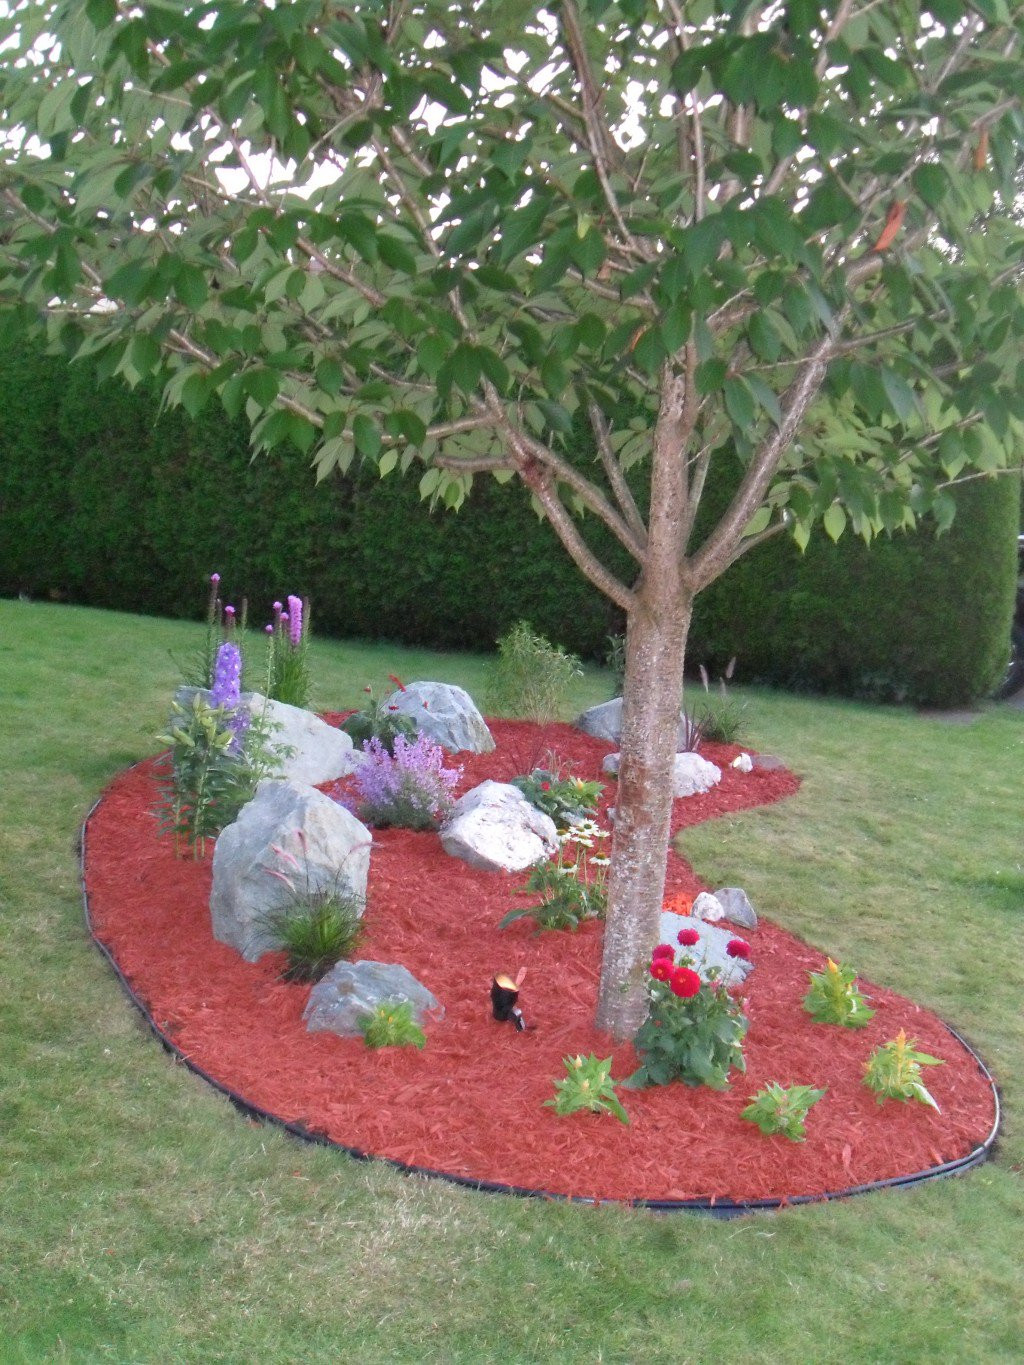 Best ideas about DIY Rockery Garden
. Save or Pin Easy DIY Landscaping Build a Rock Garden Now.